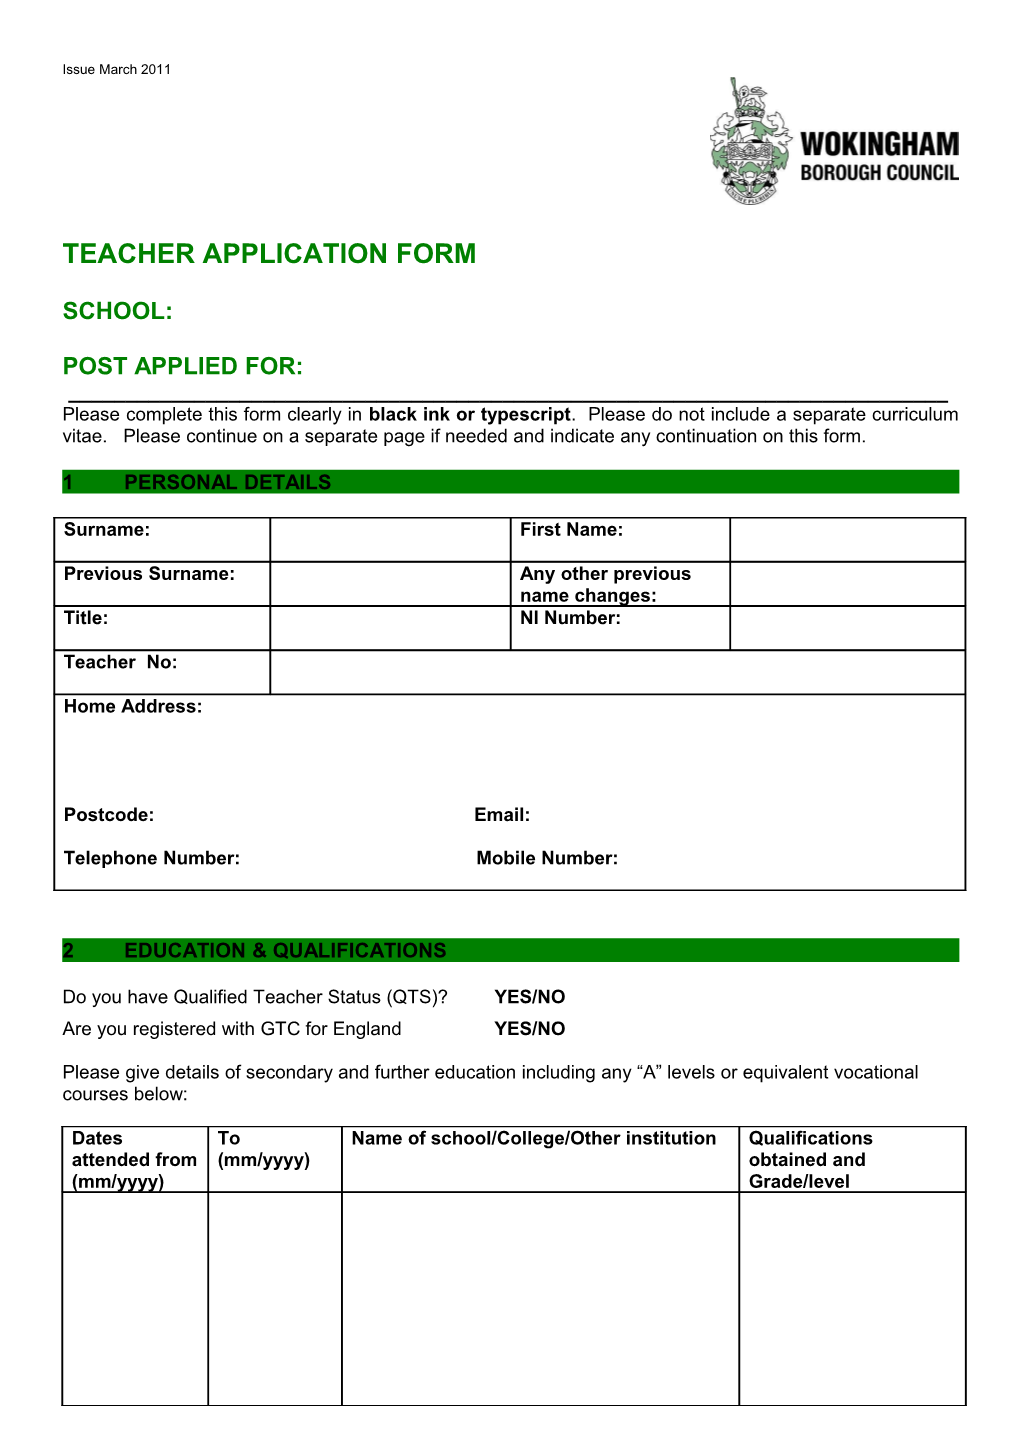 Teacher Application Form s2